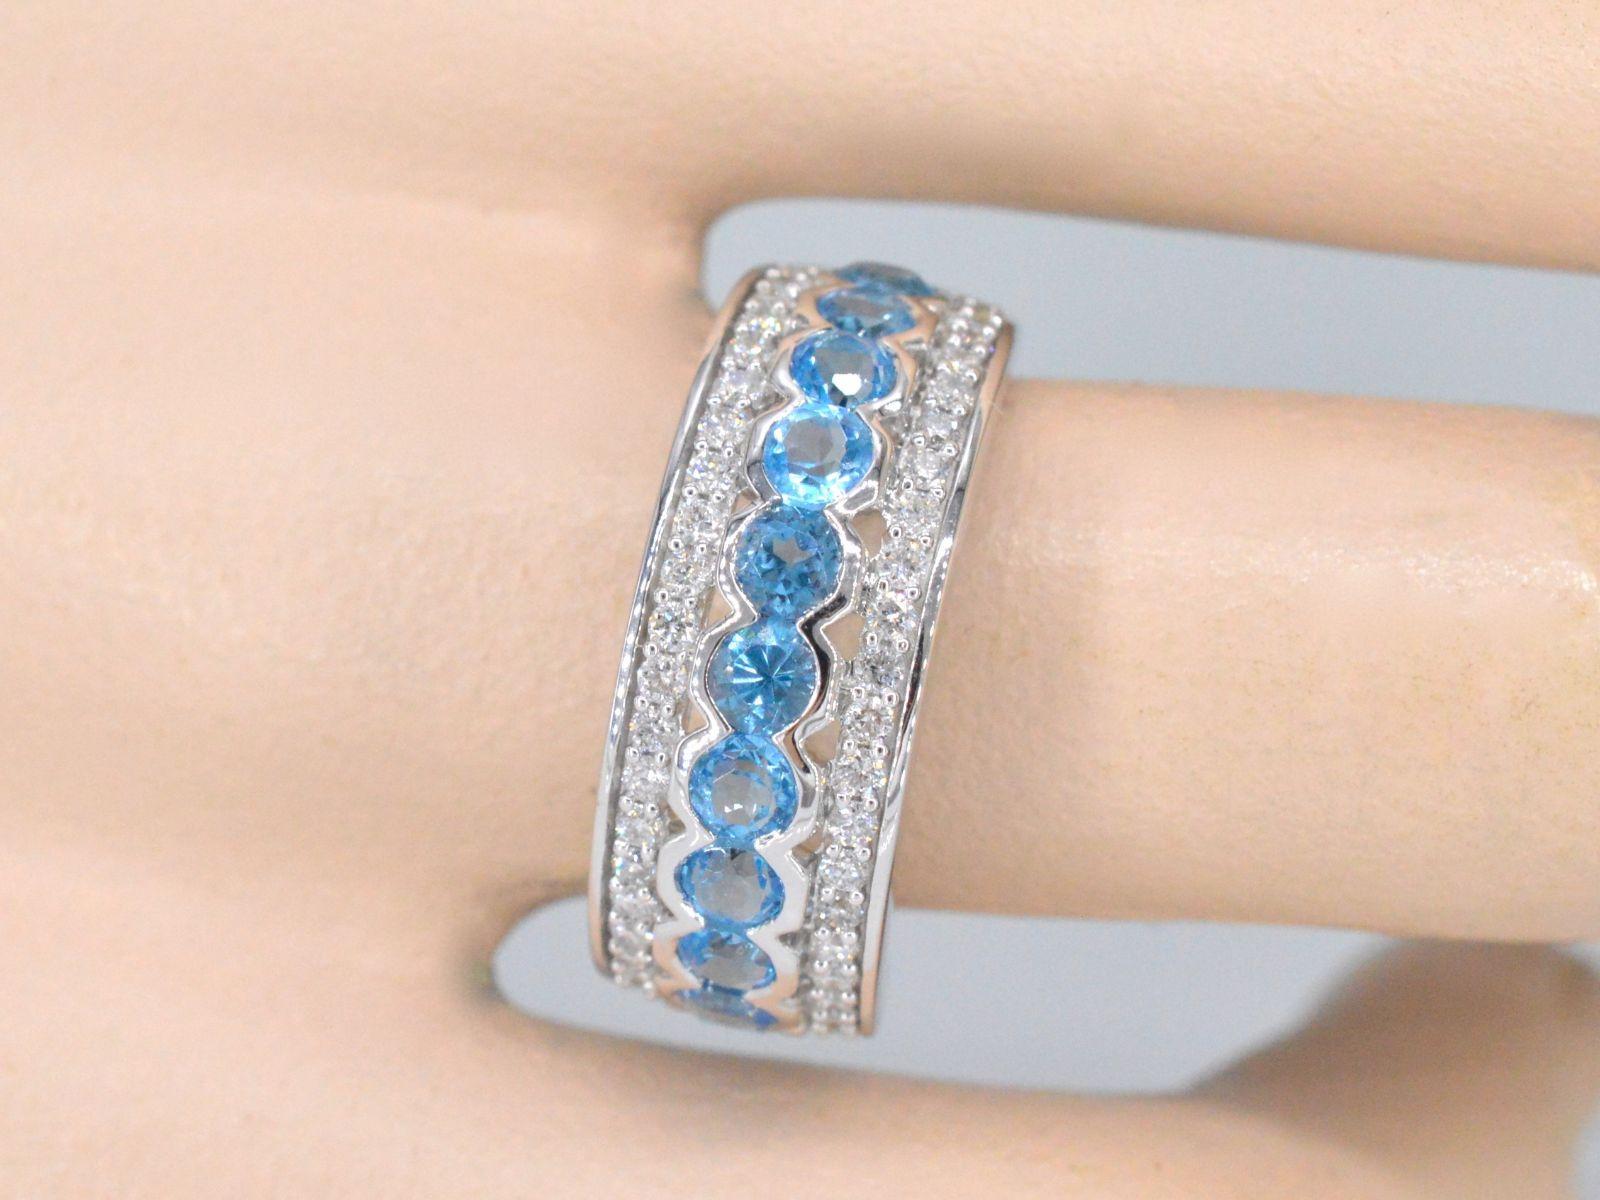 Diamonds

Weight: 0.50 carat

Cut: Brilliant cut

Colour: F-G

Clarity: SI-P

Quality: Very good

Gemstone: Topaz

Cut: Round cut

Colour: Swiss Blue

Weight: 1.50 carats

Jewel: Ring

Weight: 5.5 gram

Hallmark: 14 karat 

Ring size: 54 (17.25